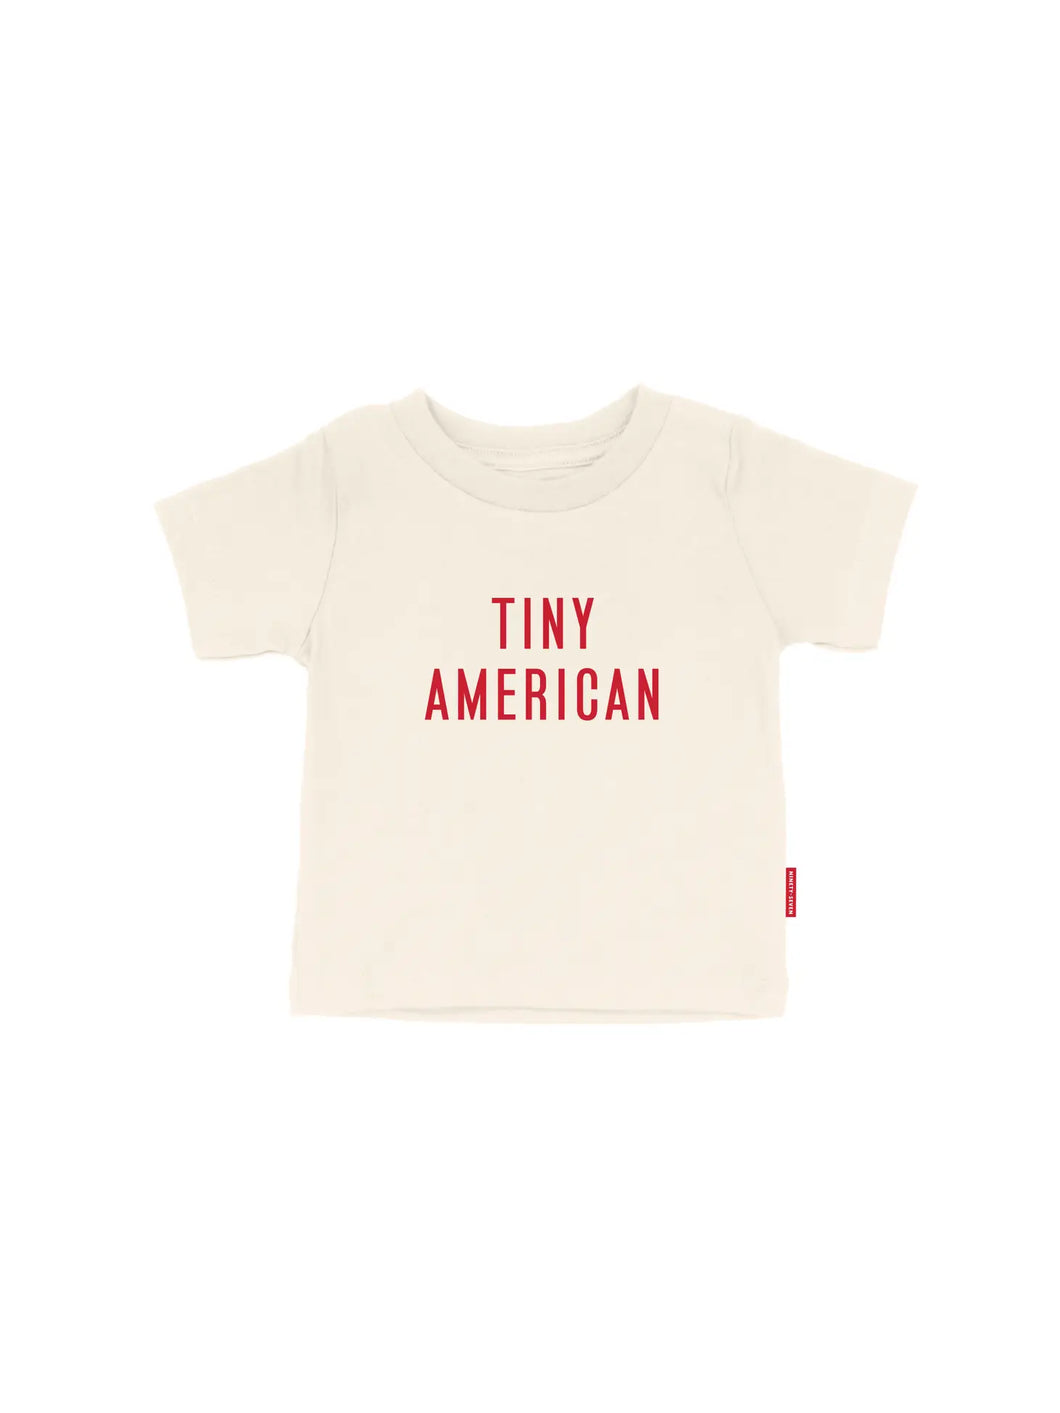 Tiny American Tee